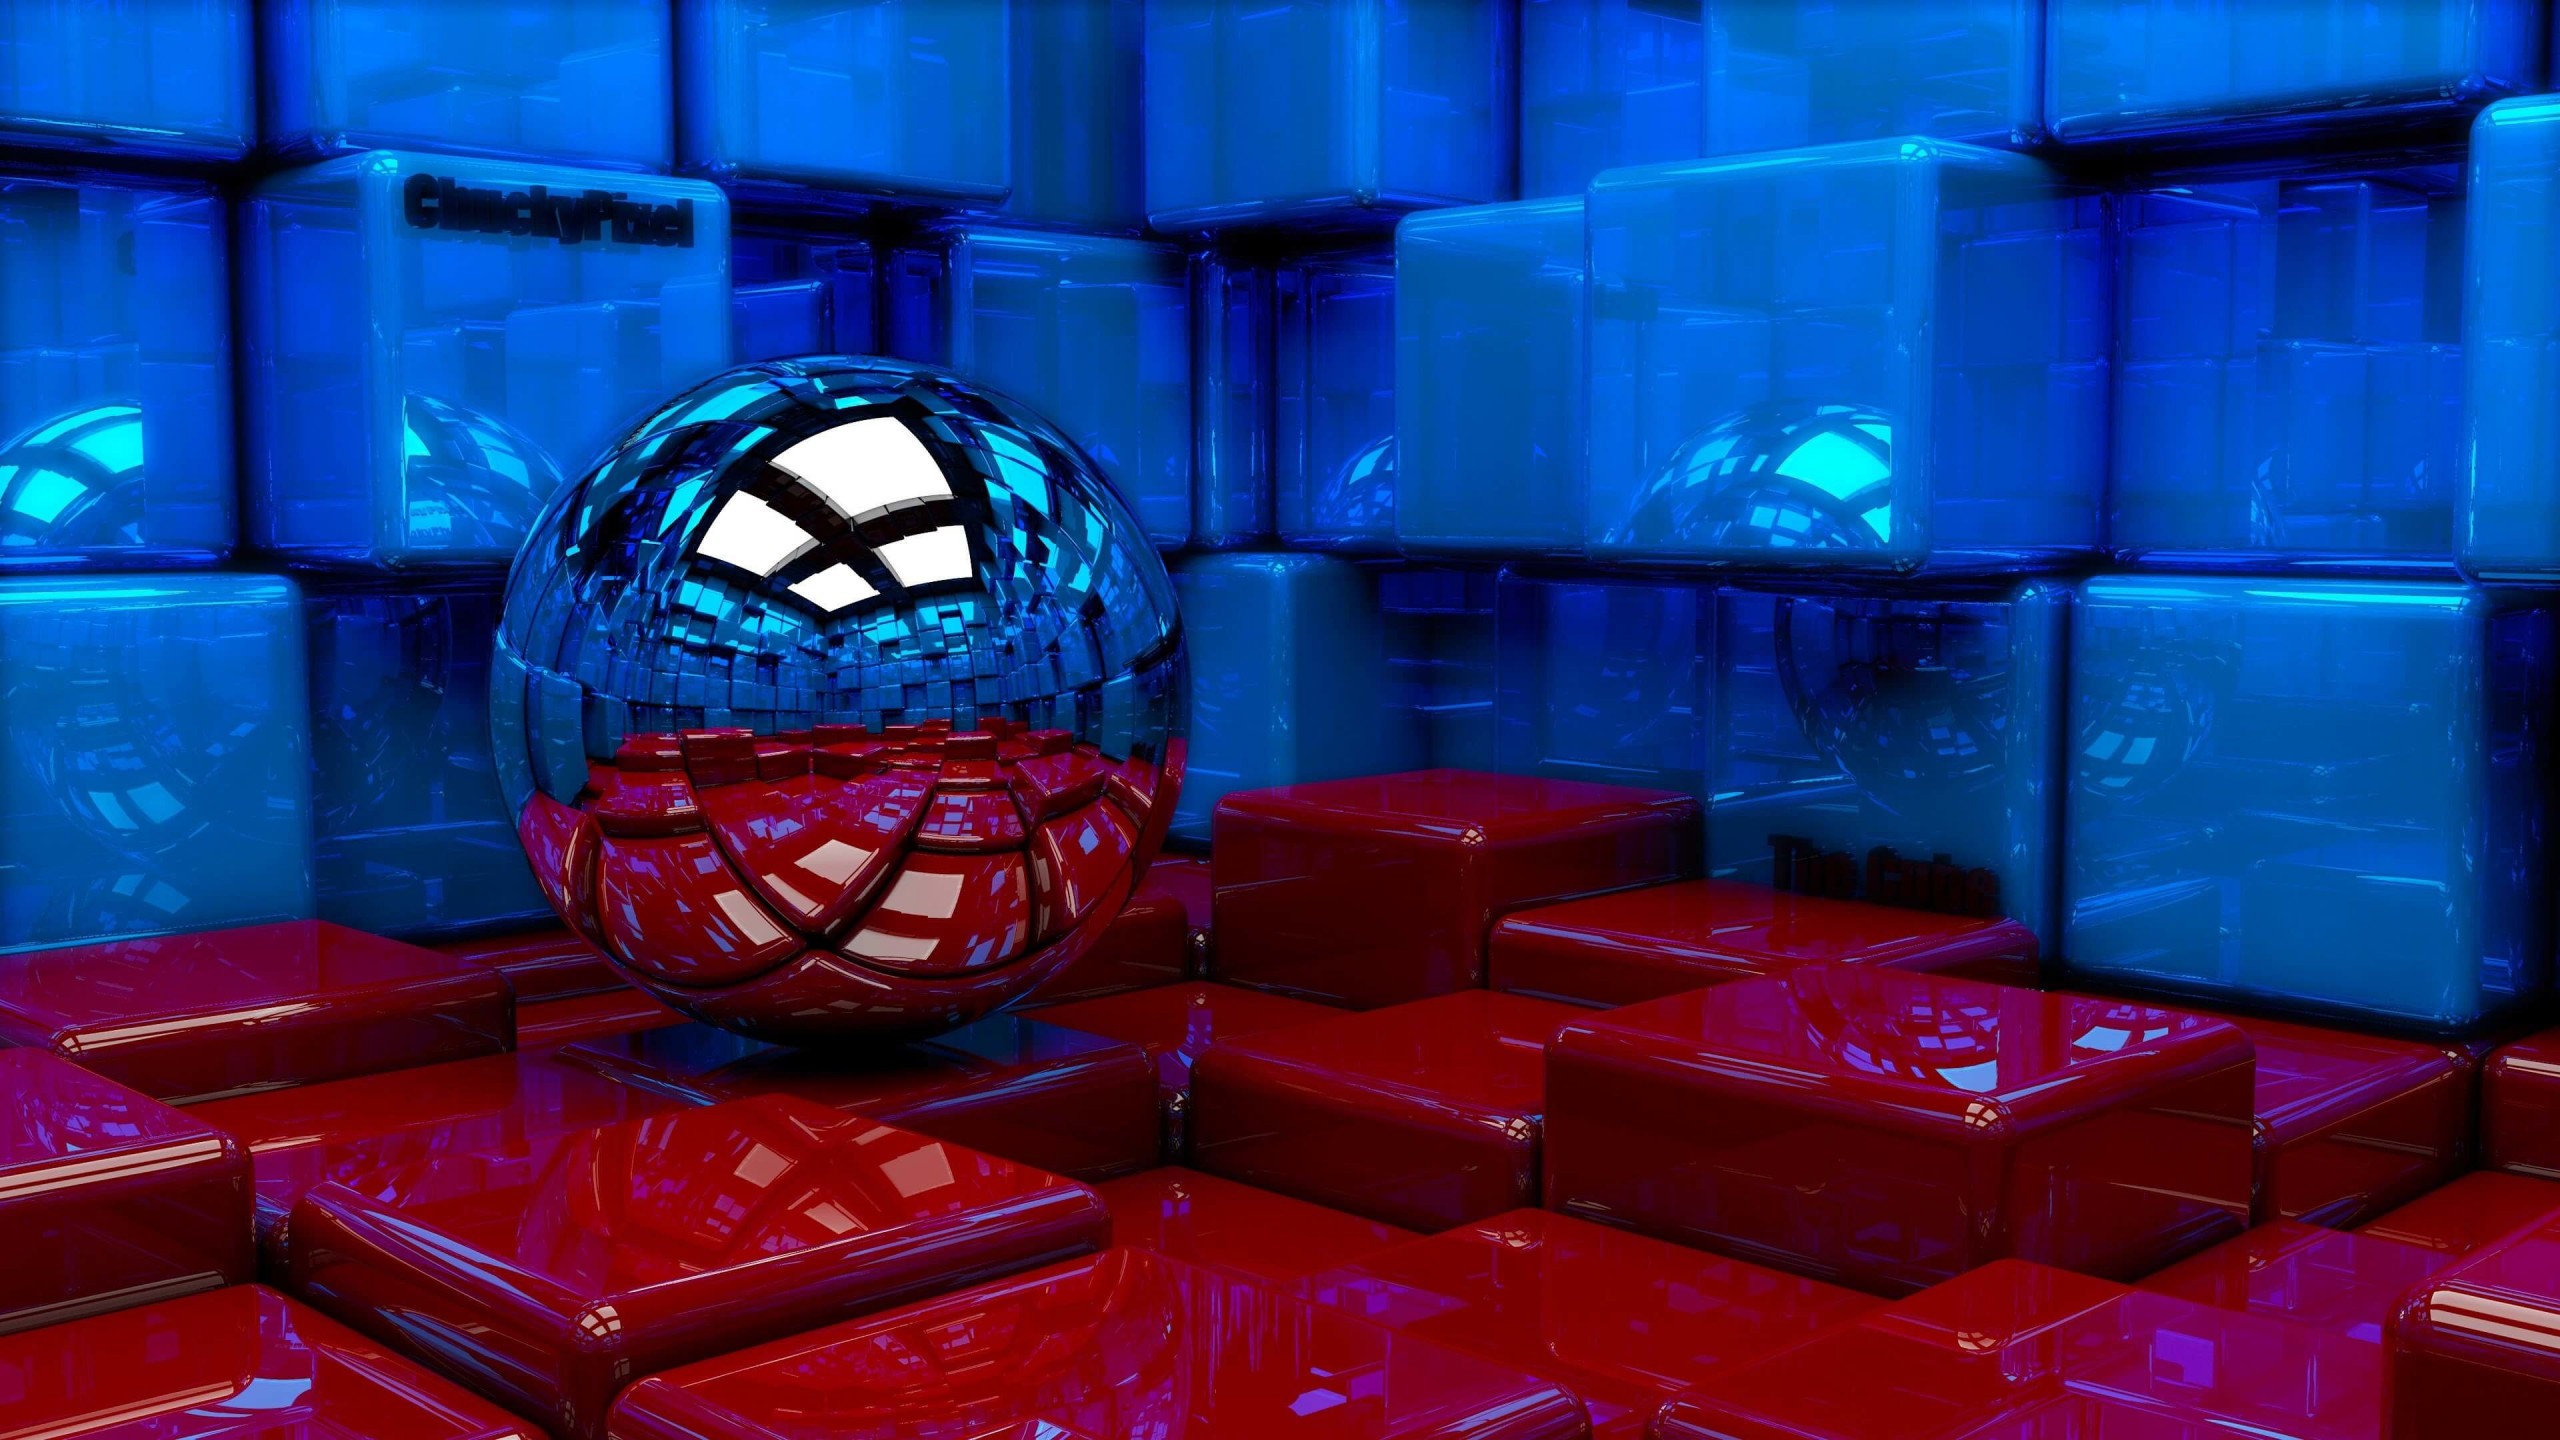 Metallic Sphere Reflecting The Cube Room Wallpaper for Social Media YouTube Channel Art